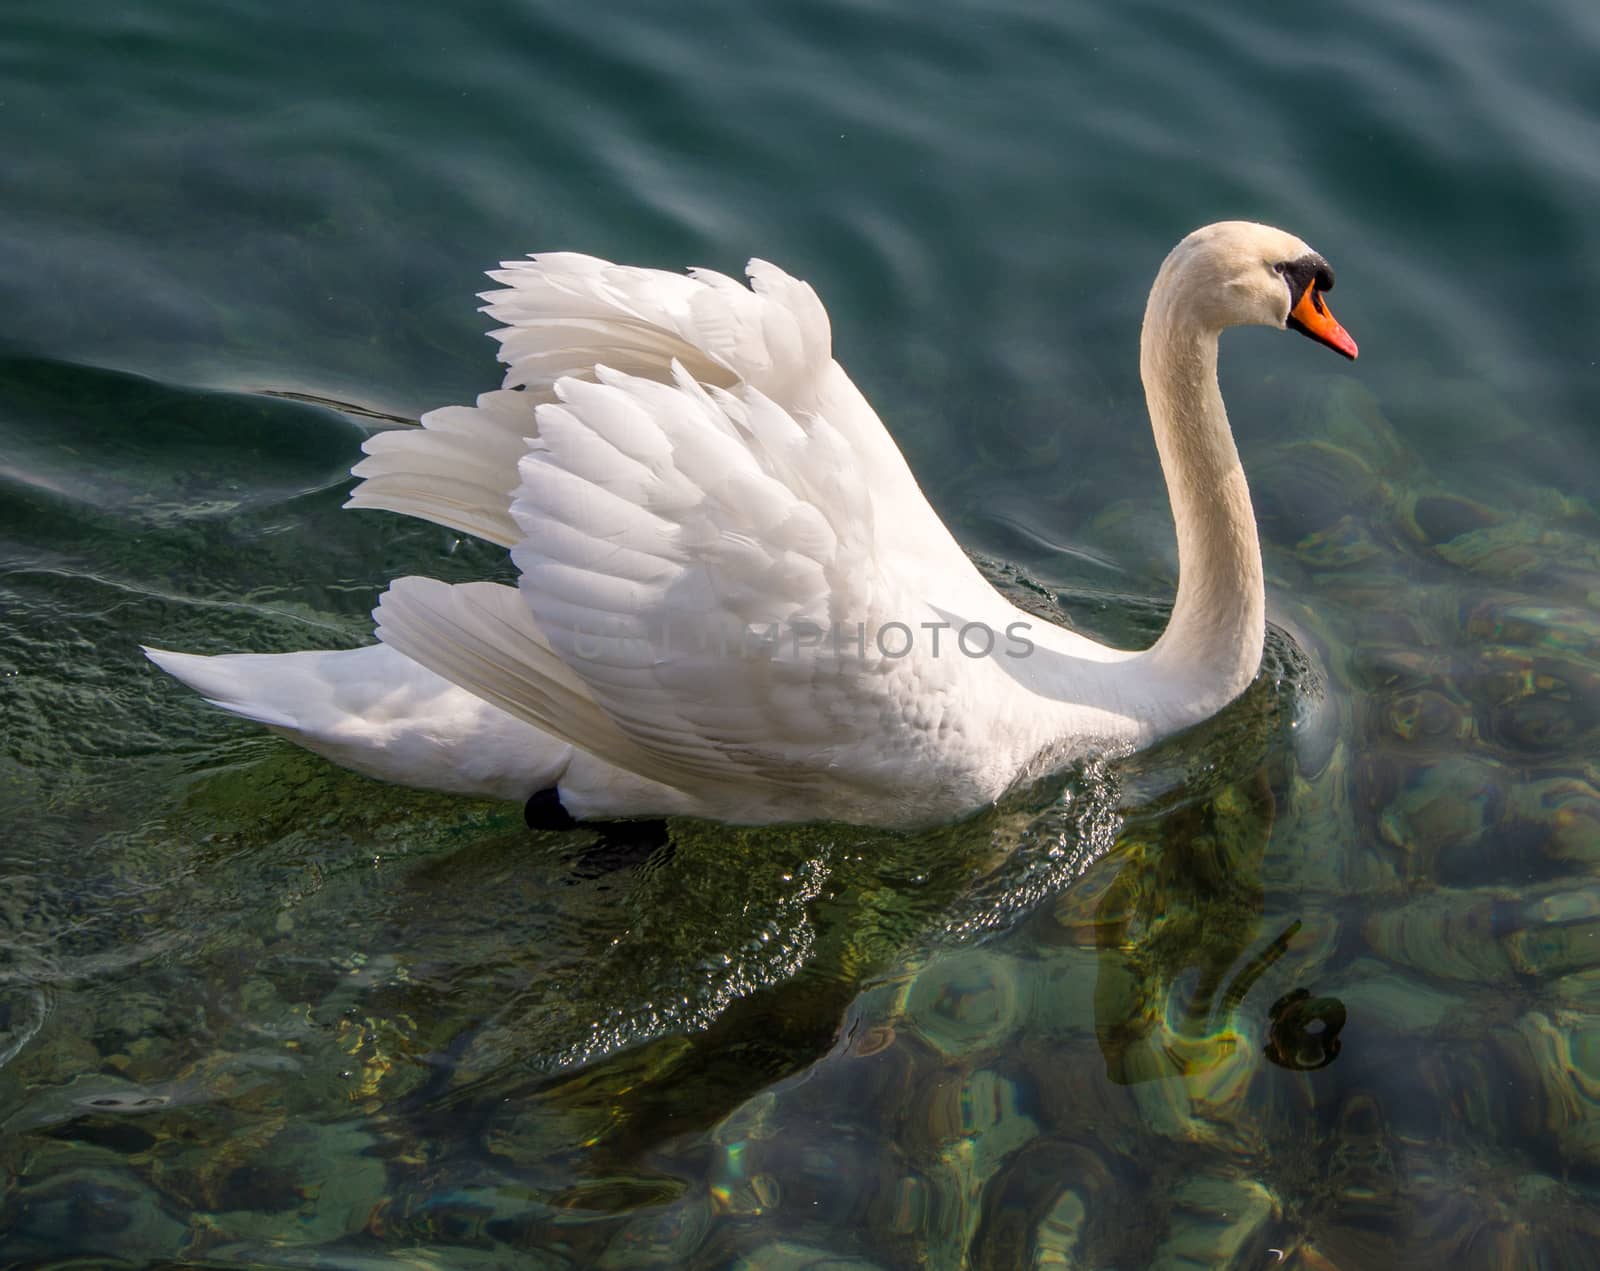 White Swan by danieldep